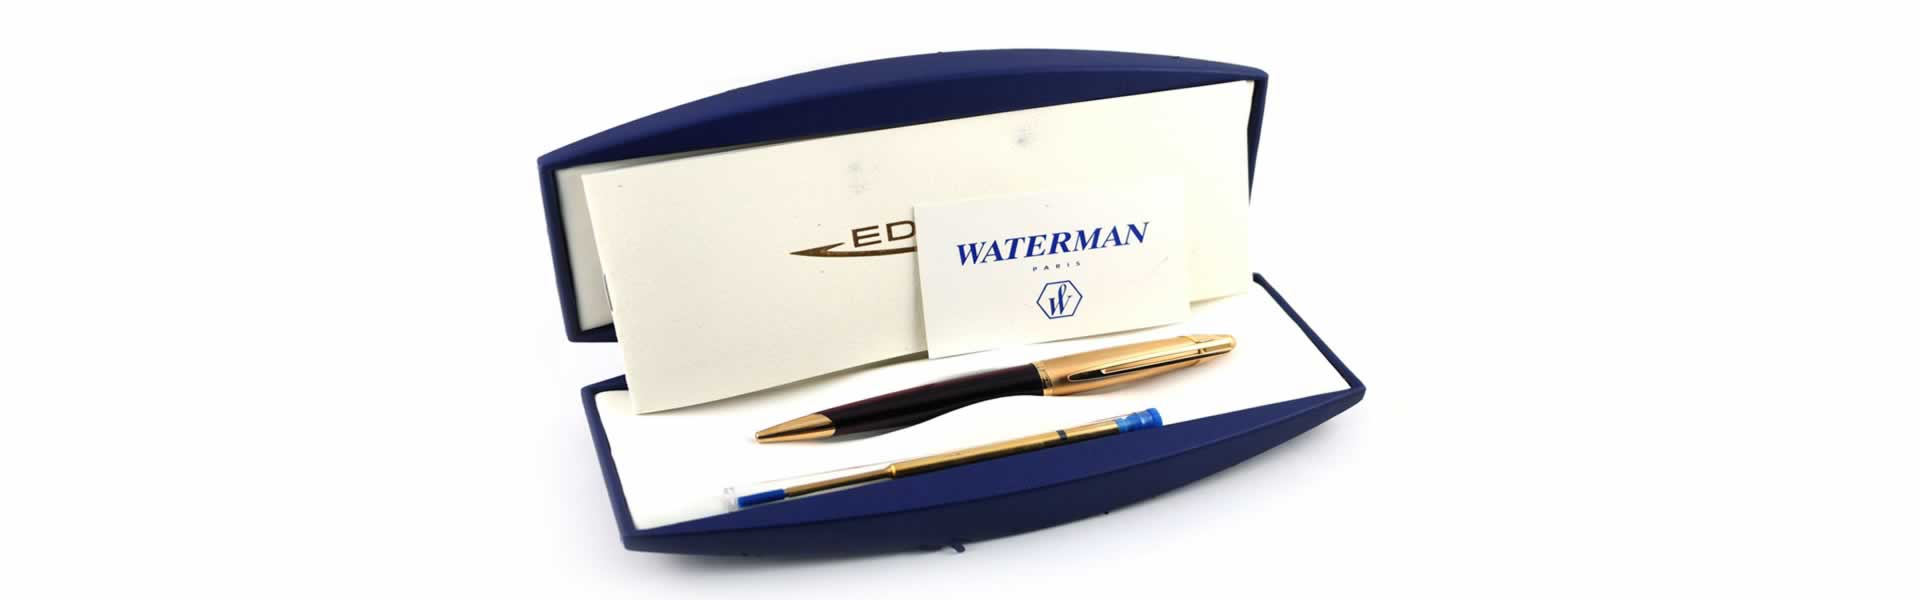 waterman-pens